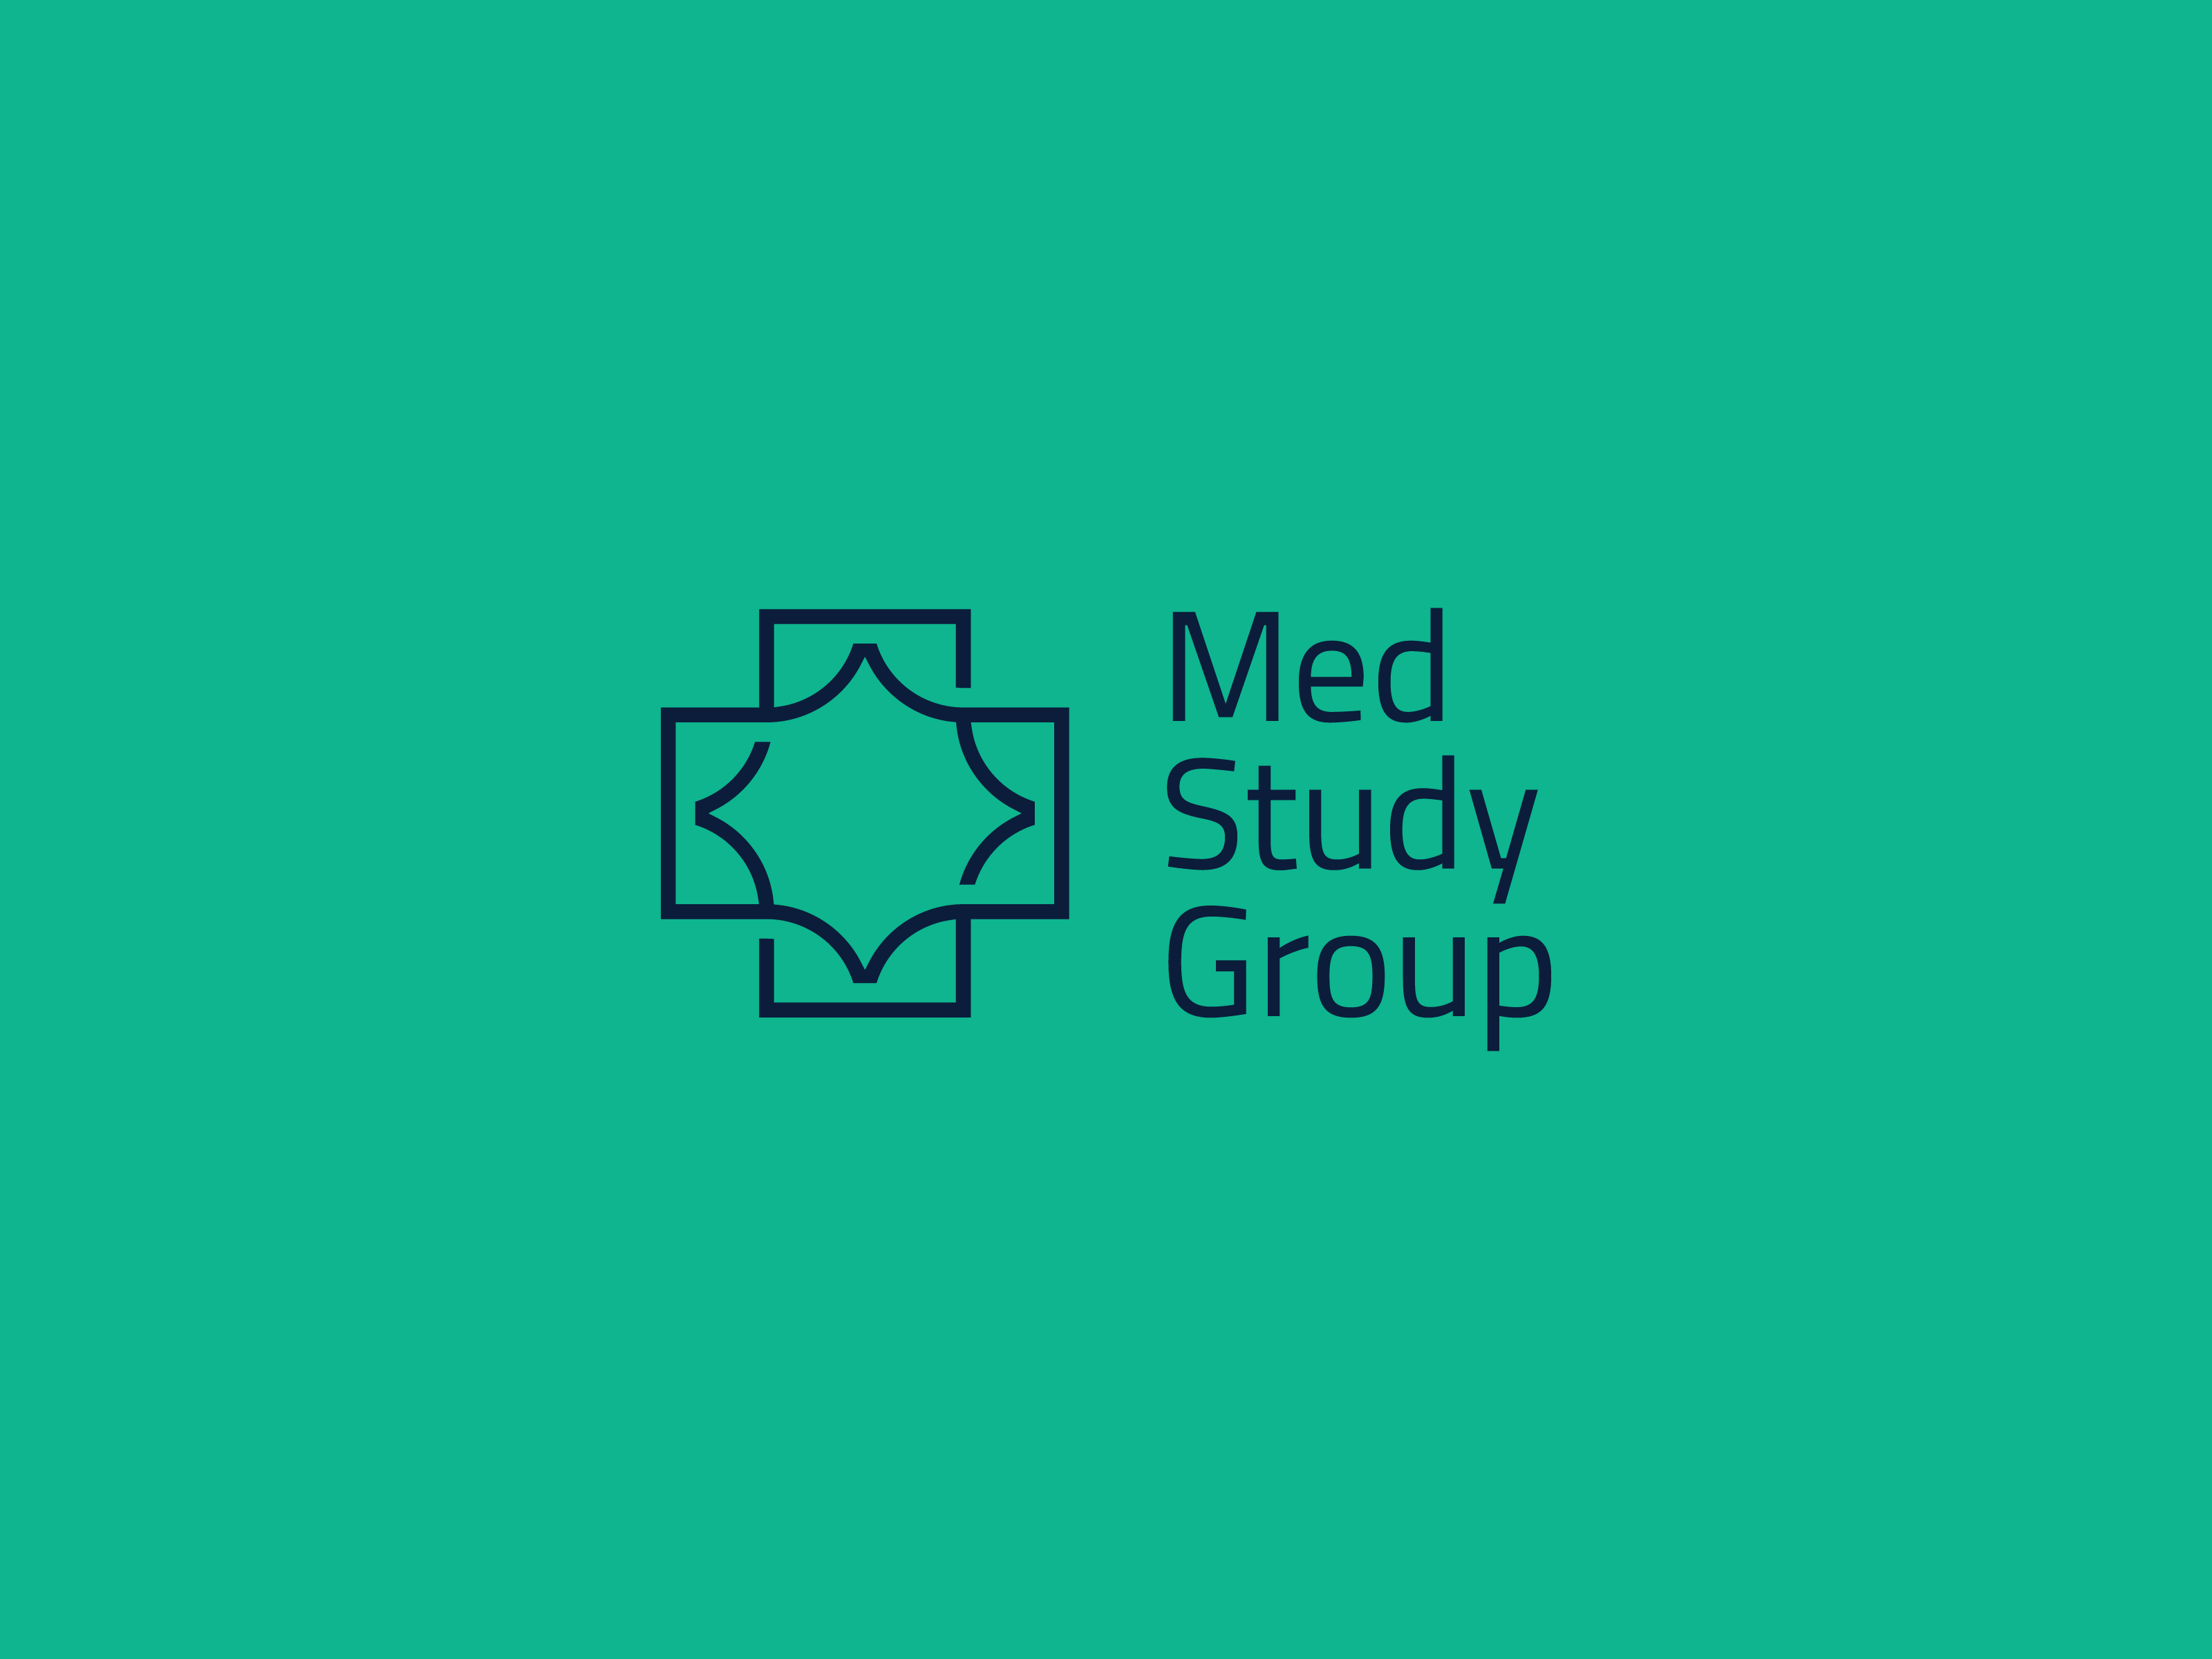 Study group logo by JulioWonderlander on DeviantArt